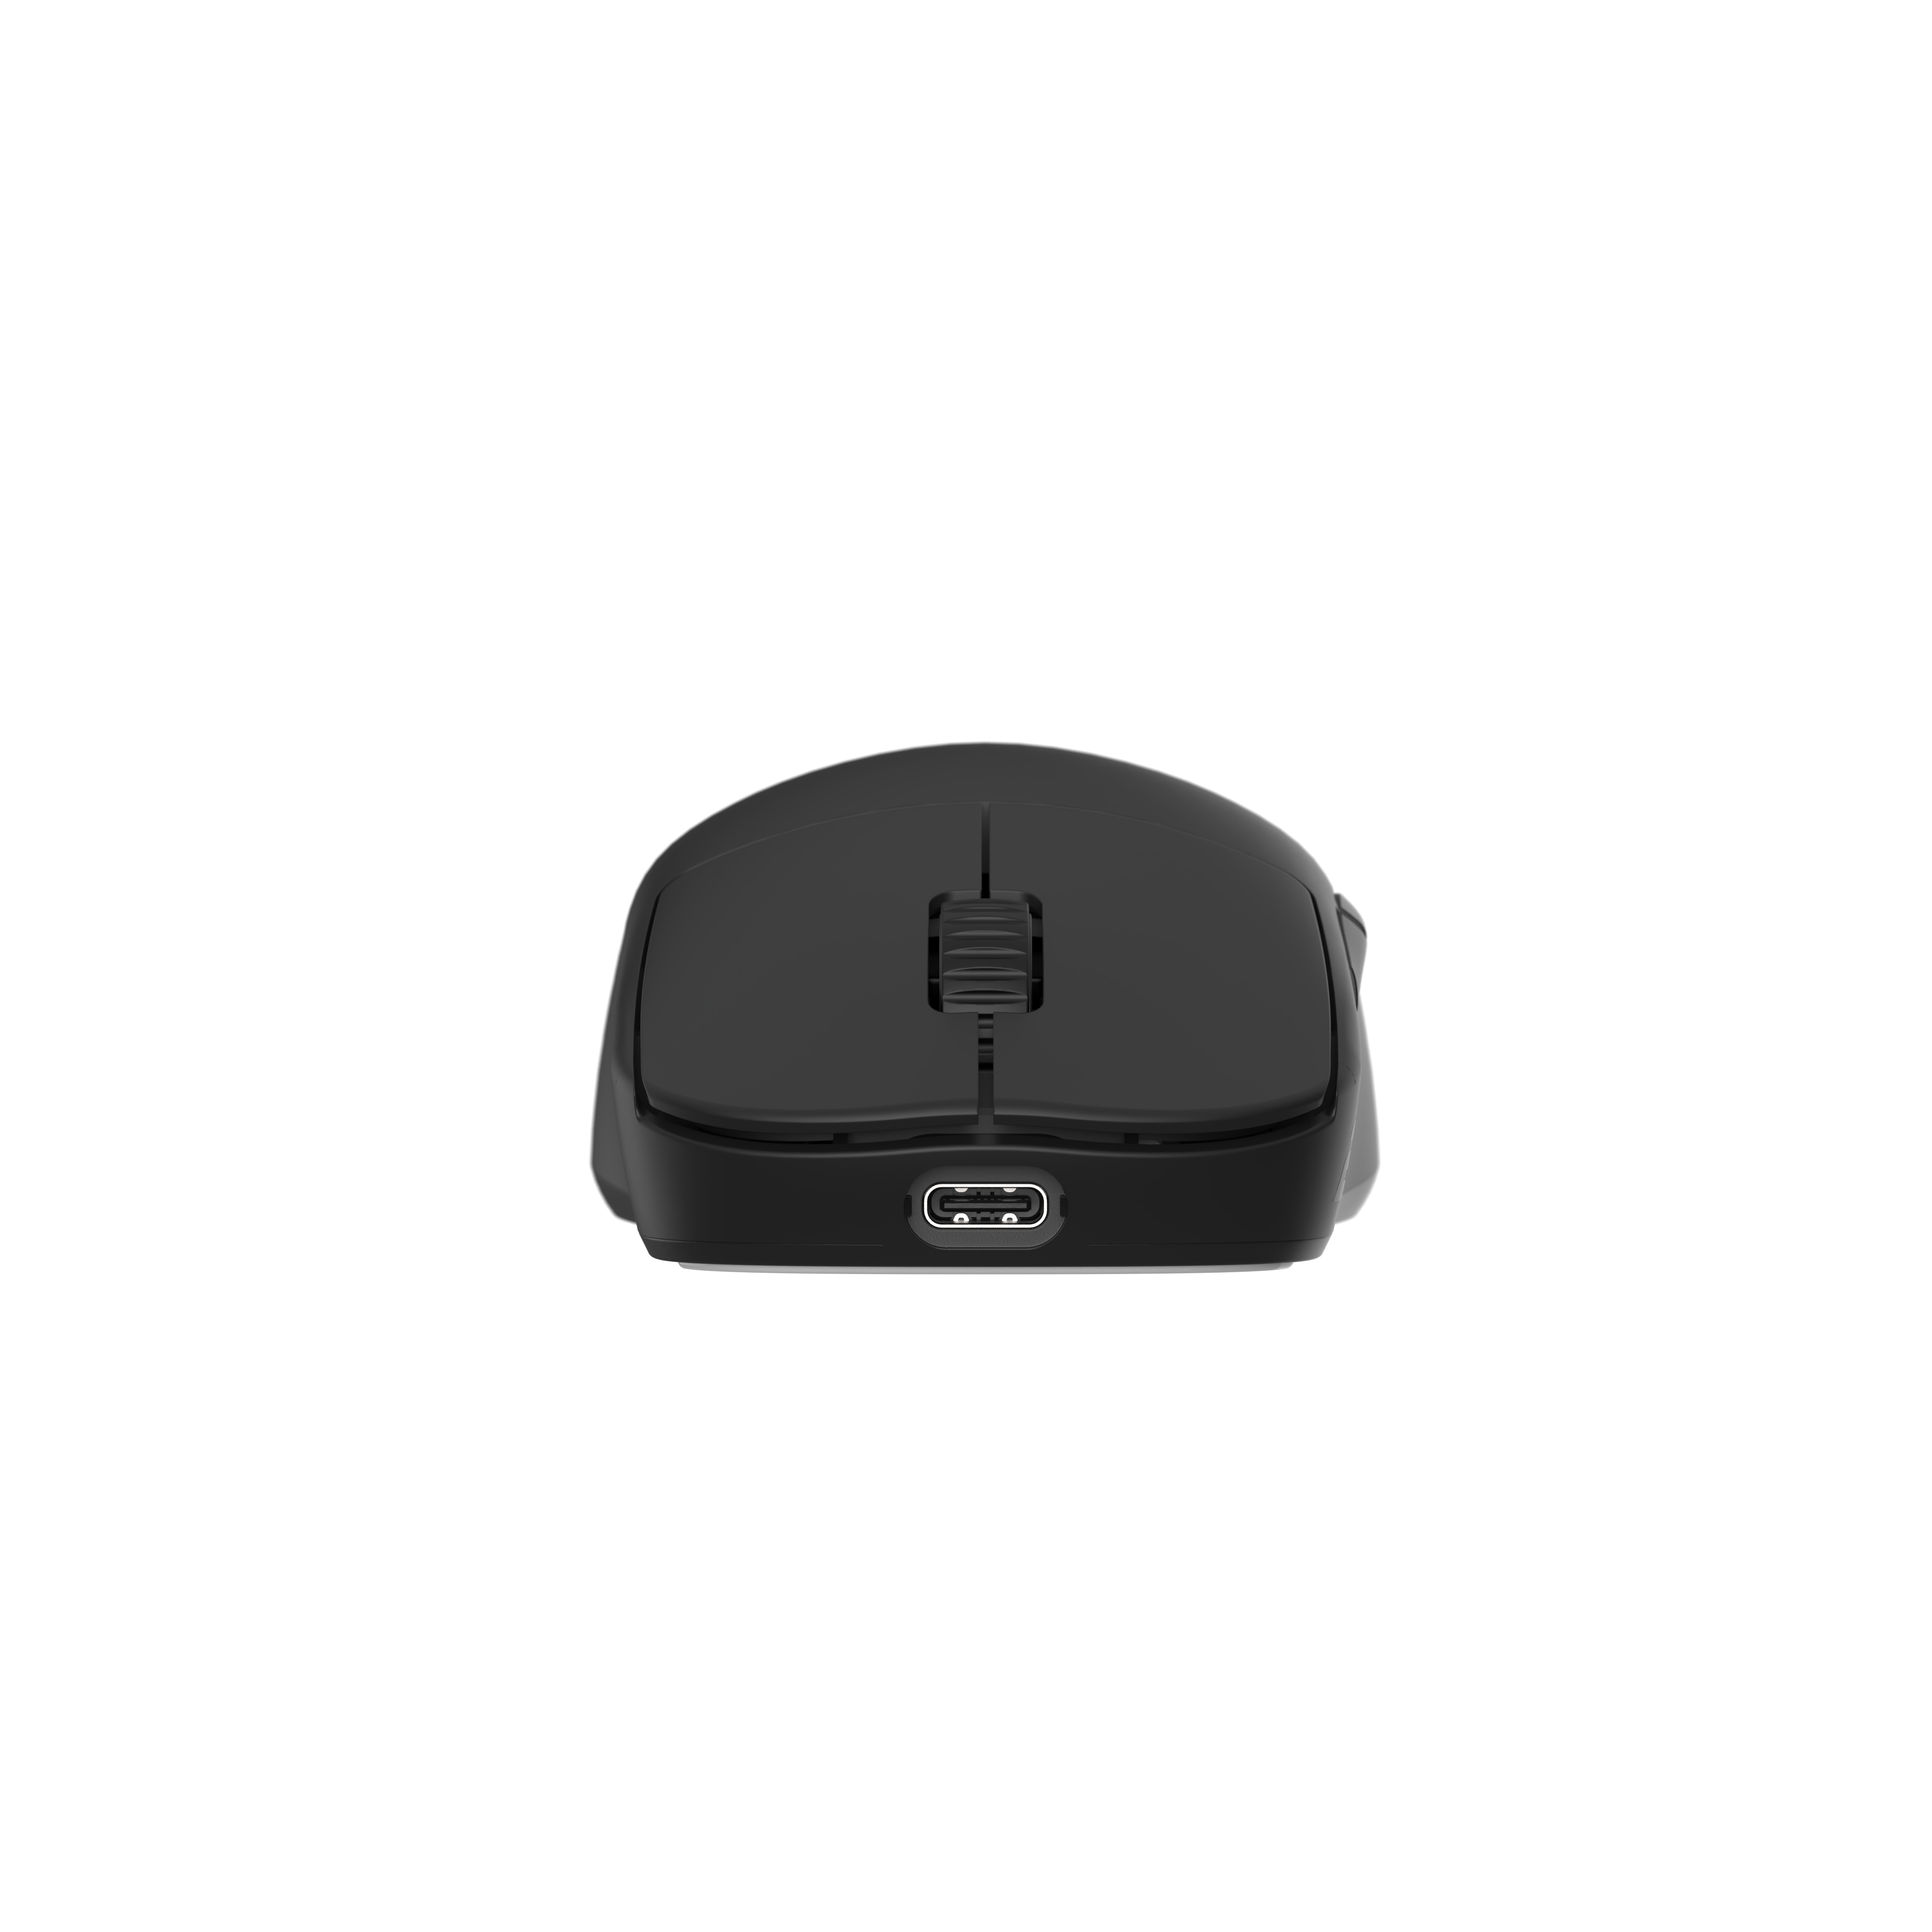 Endgame Gear - Endgame Gear OP1we Wireless Gaming Mouse - Black